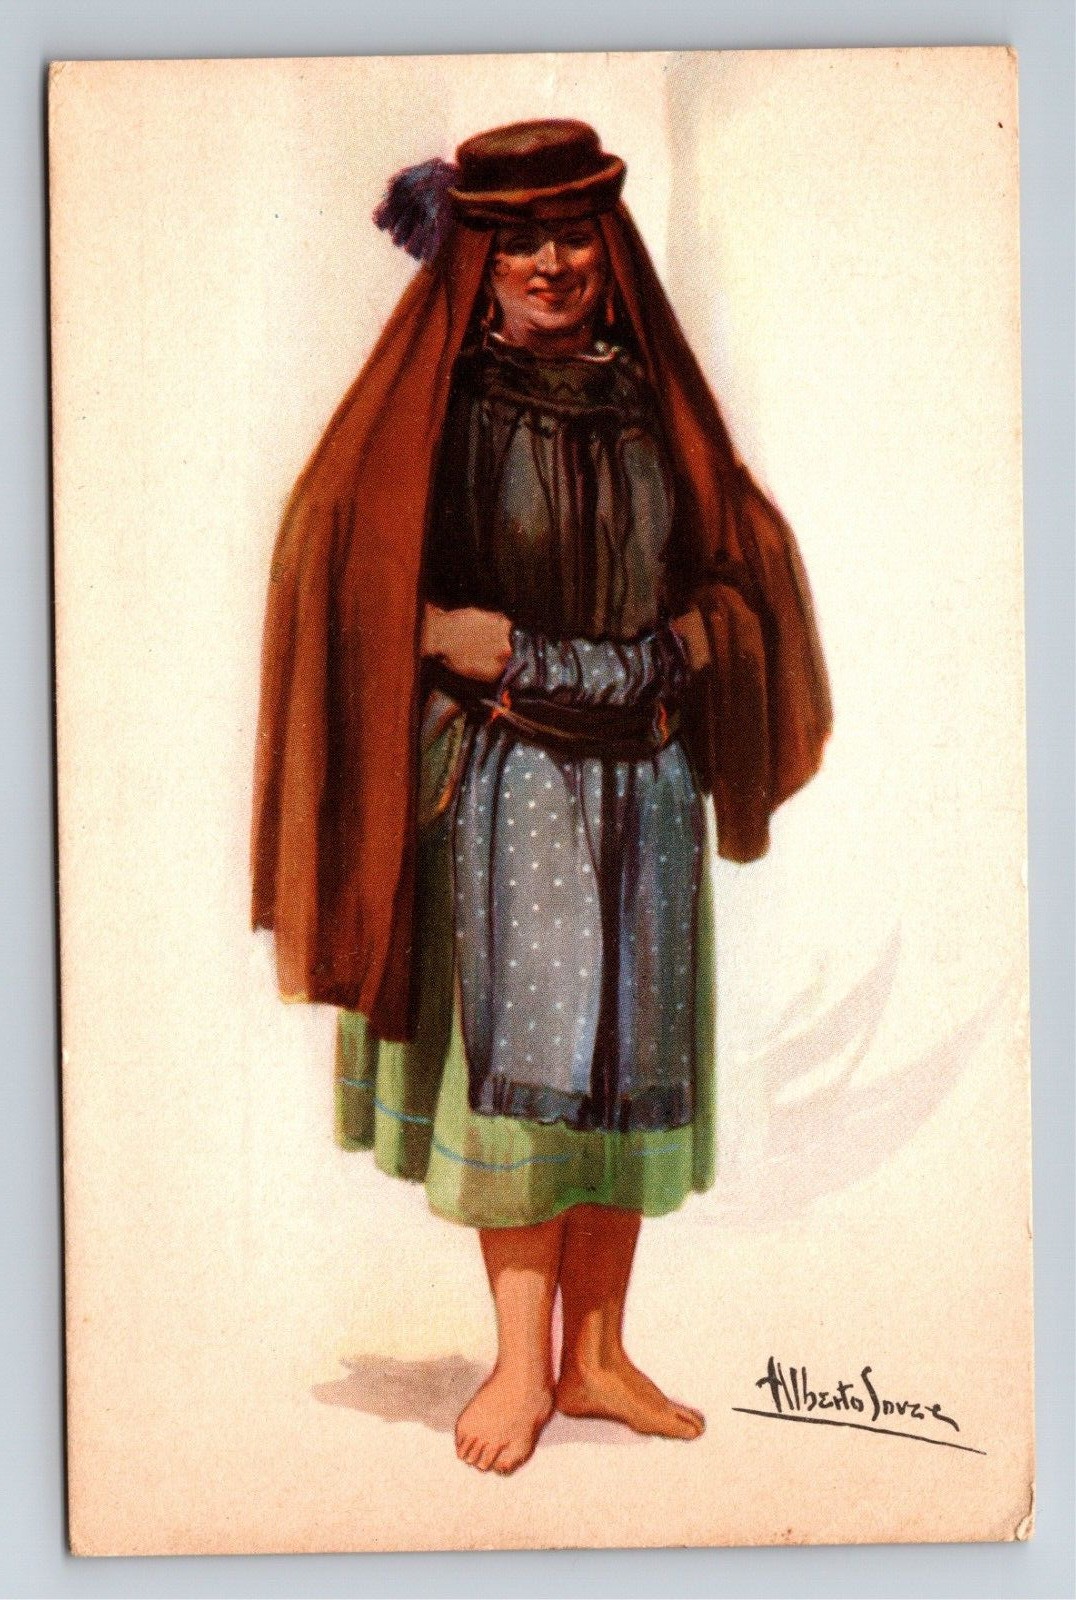 Vintage Postcard - Alberto Souza Art - Ethnic Women\'s Dress - Portugal